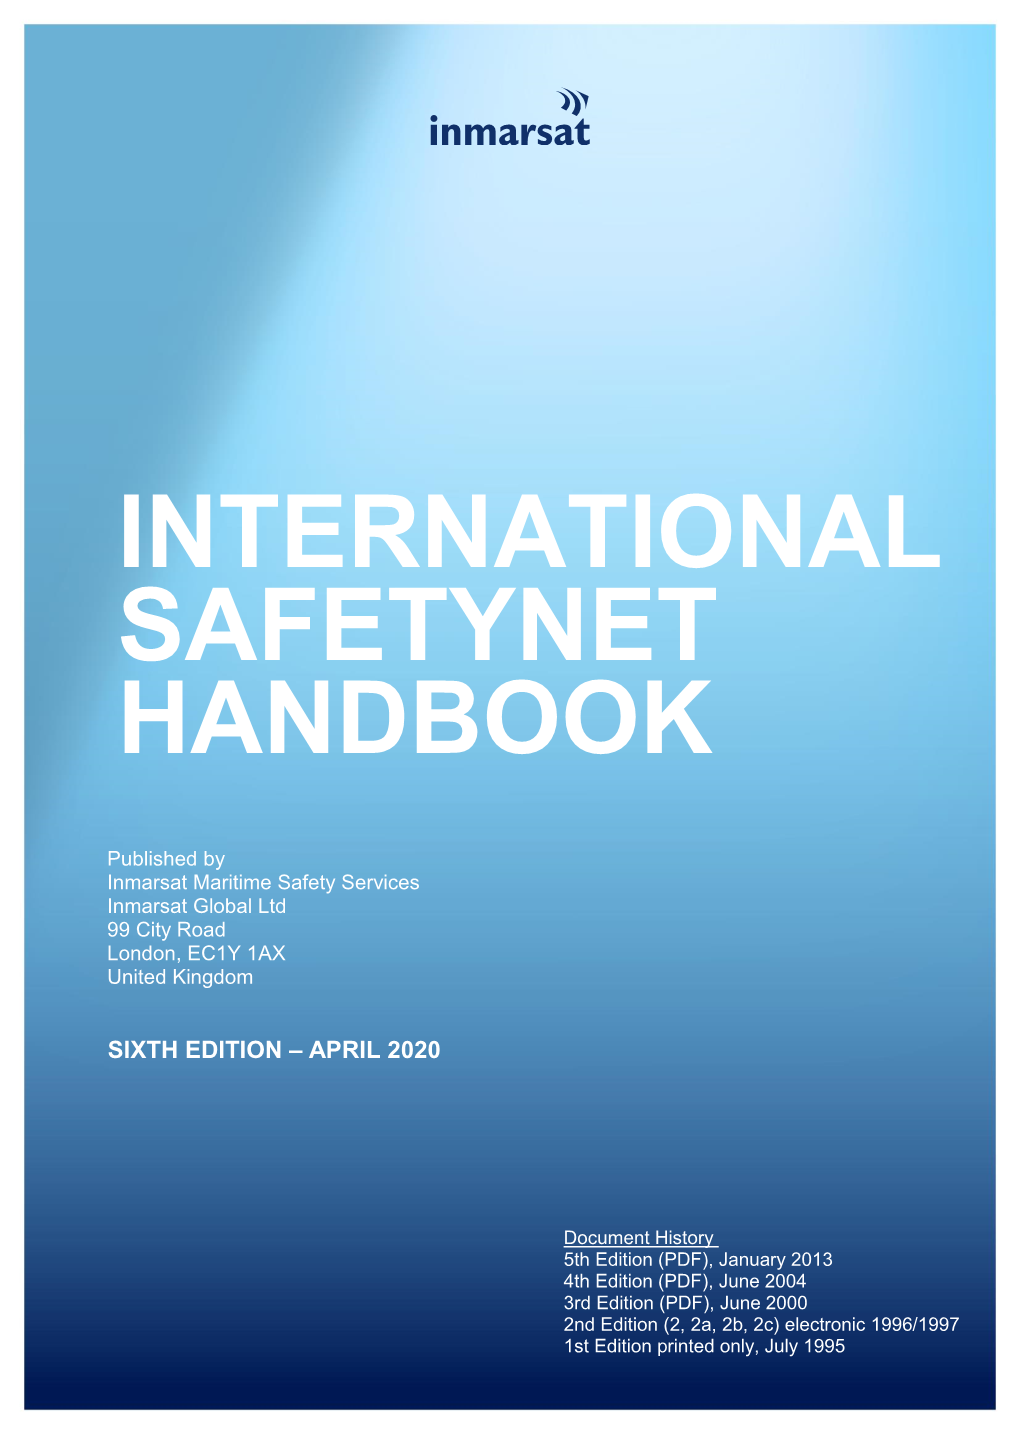 Inmarsat Safetynet Handbook